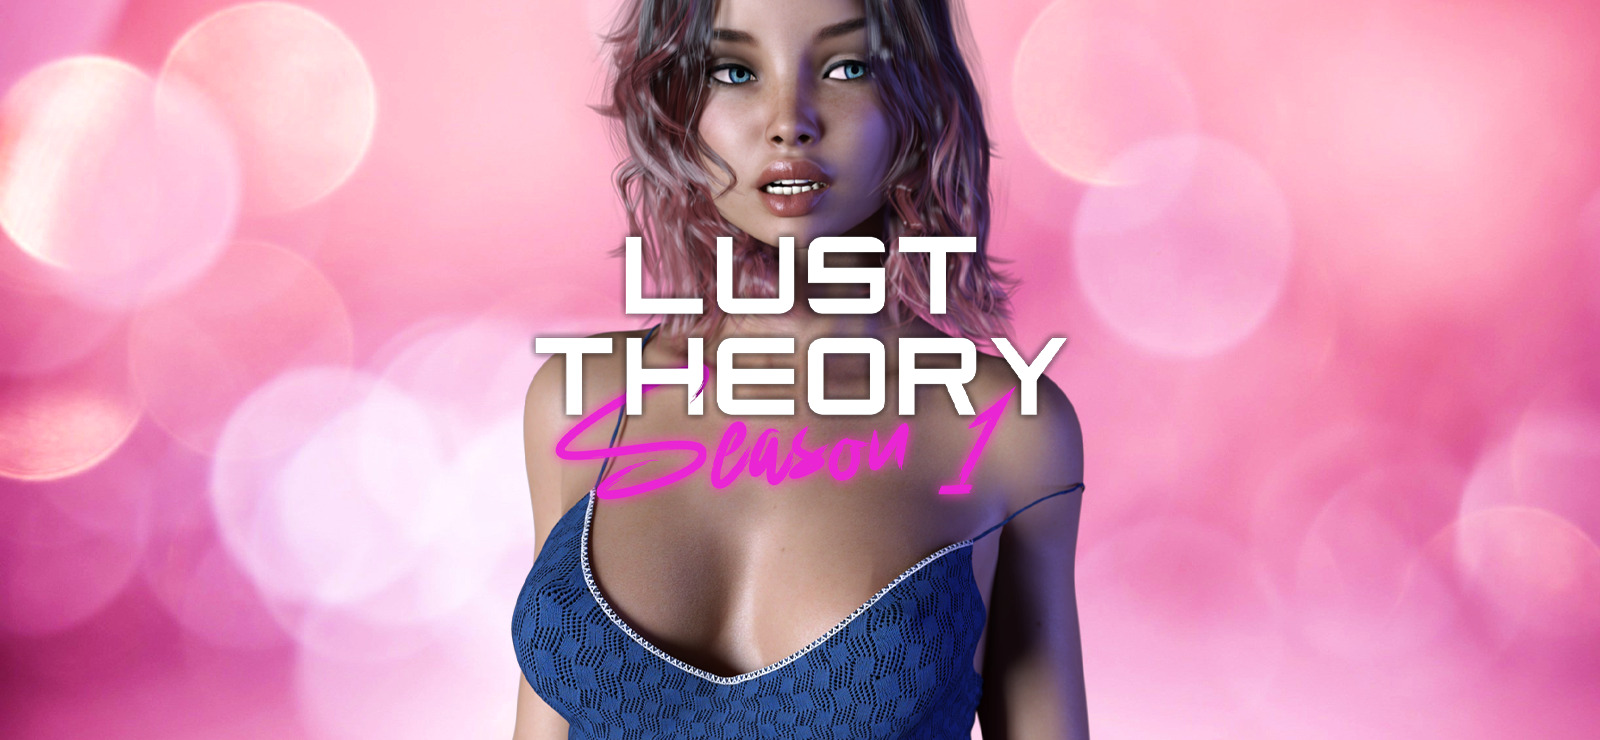 Lust Theory - Season 1 on GOG.com